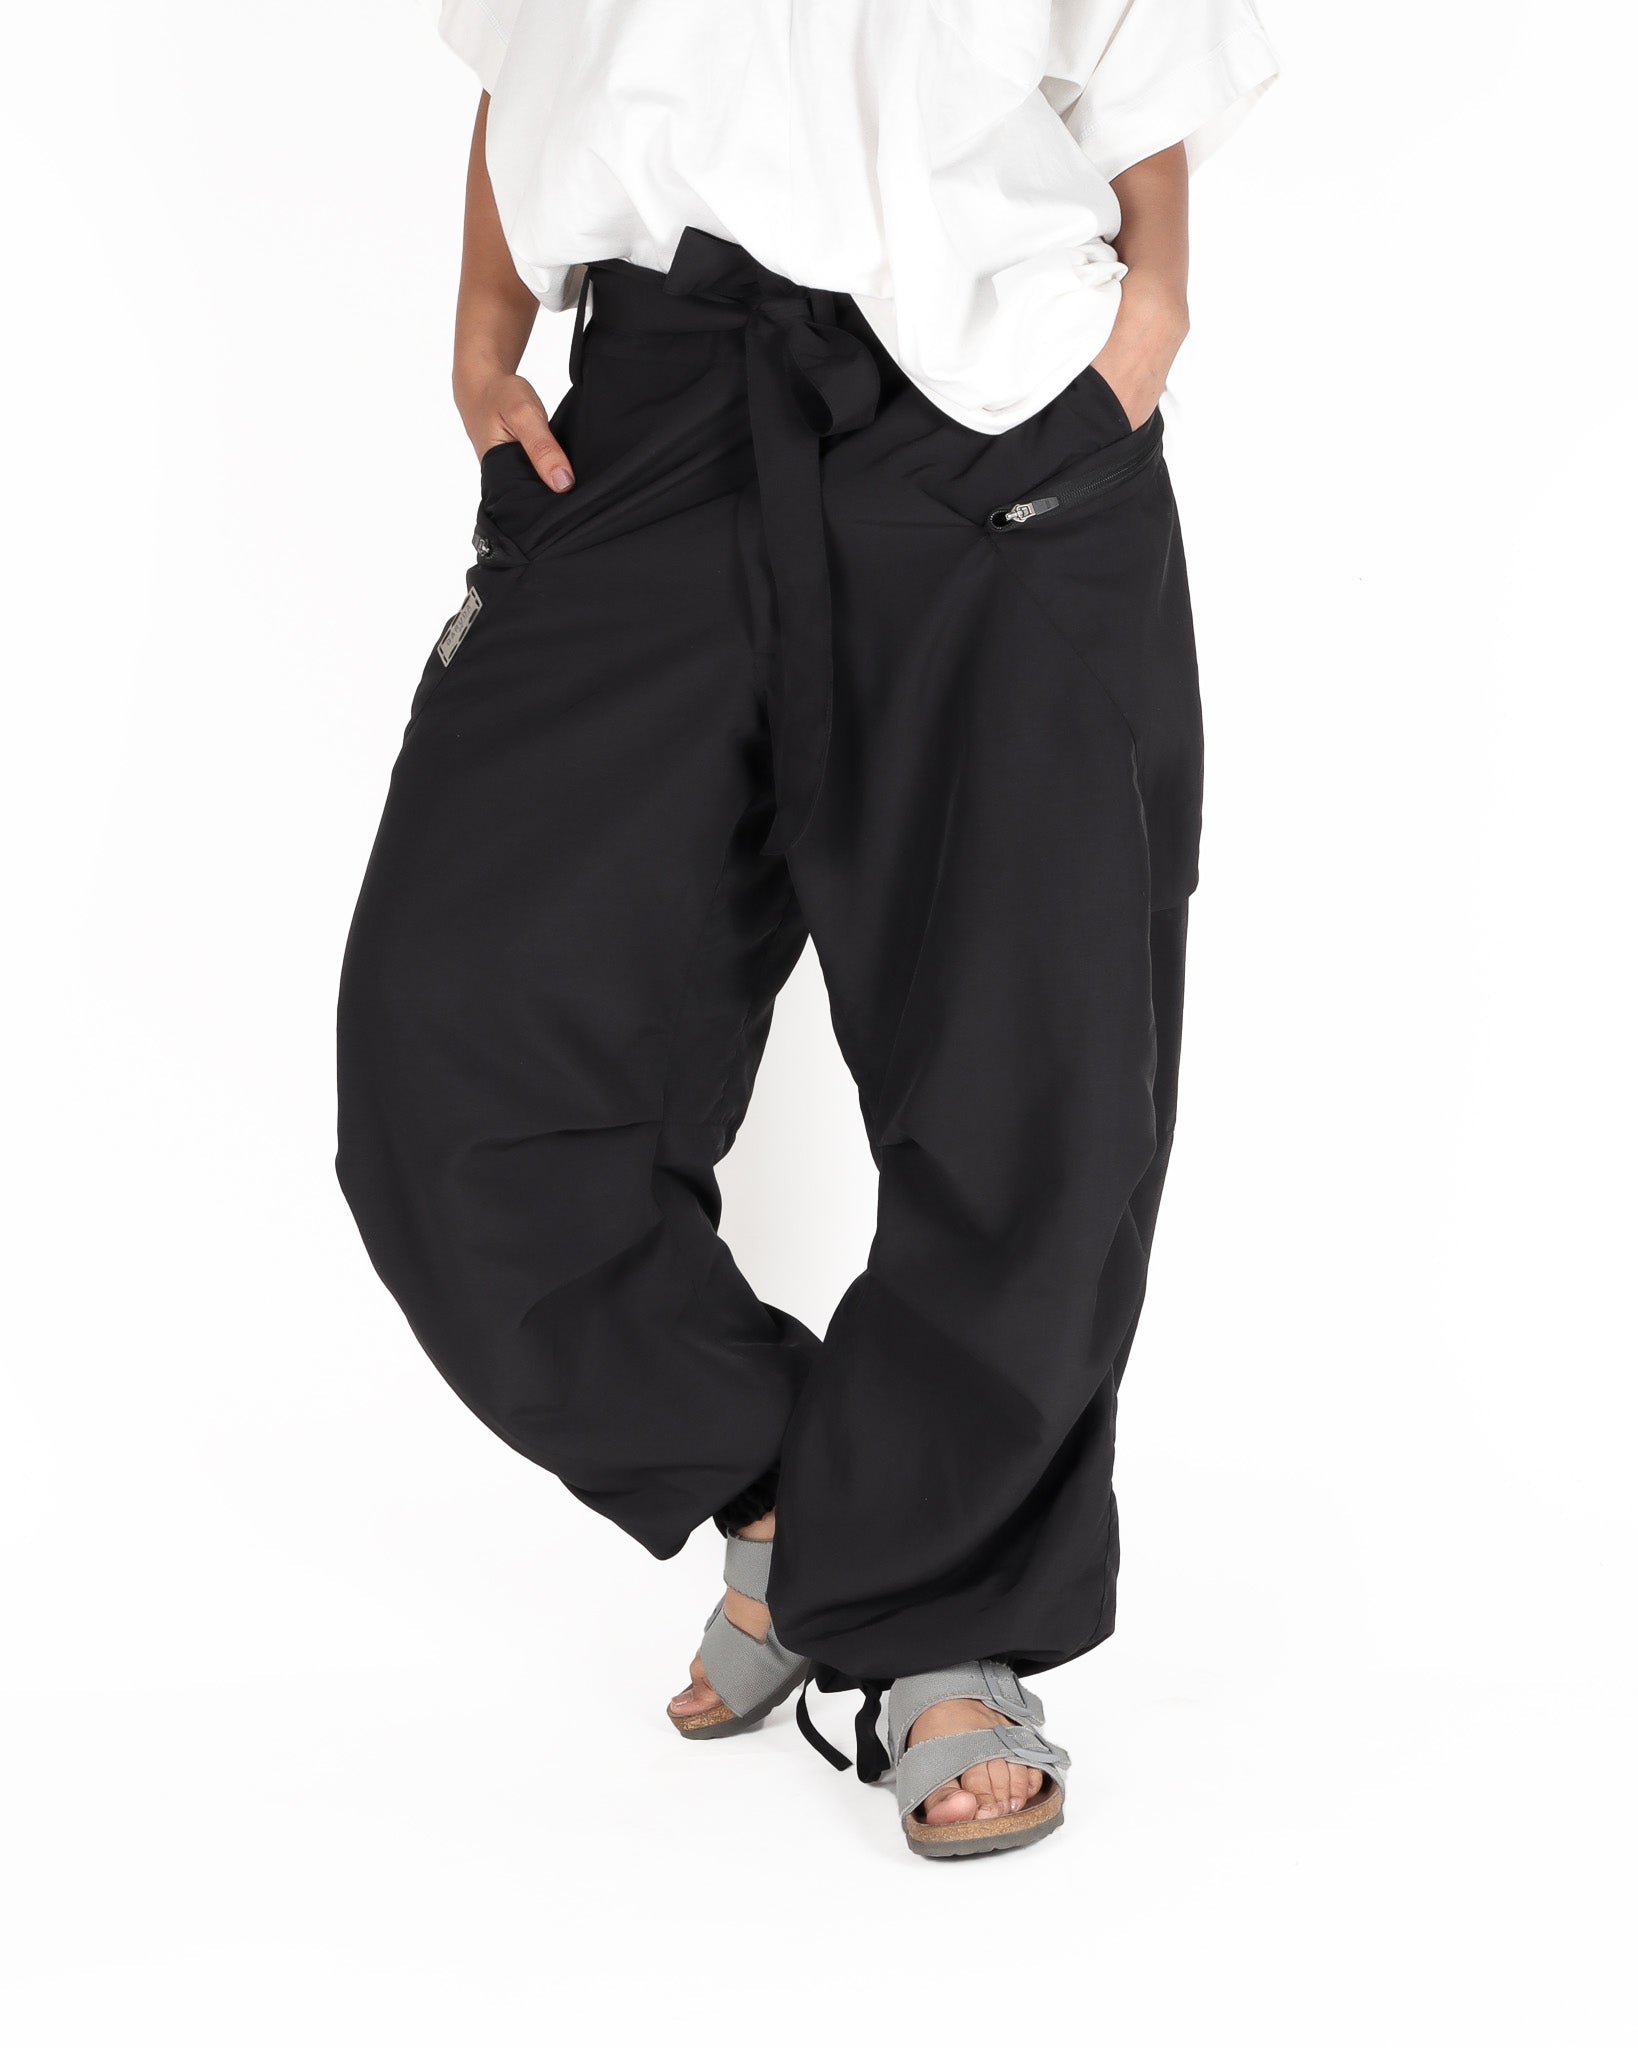 YOOTIKO Parachute Pants for Women Metallic Pants Silver Y2K High